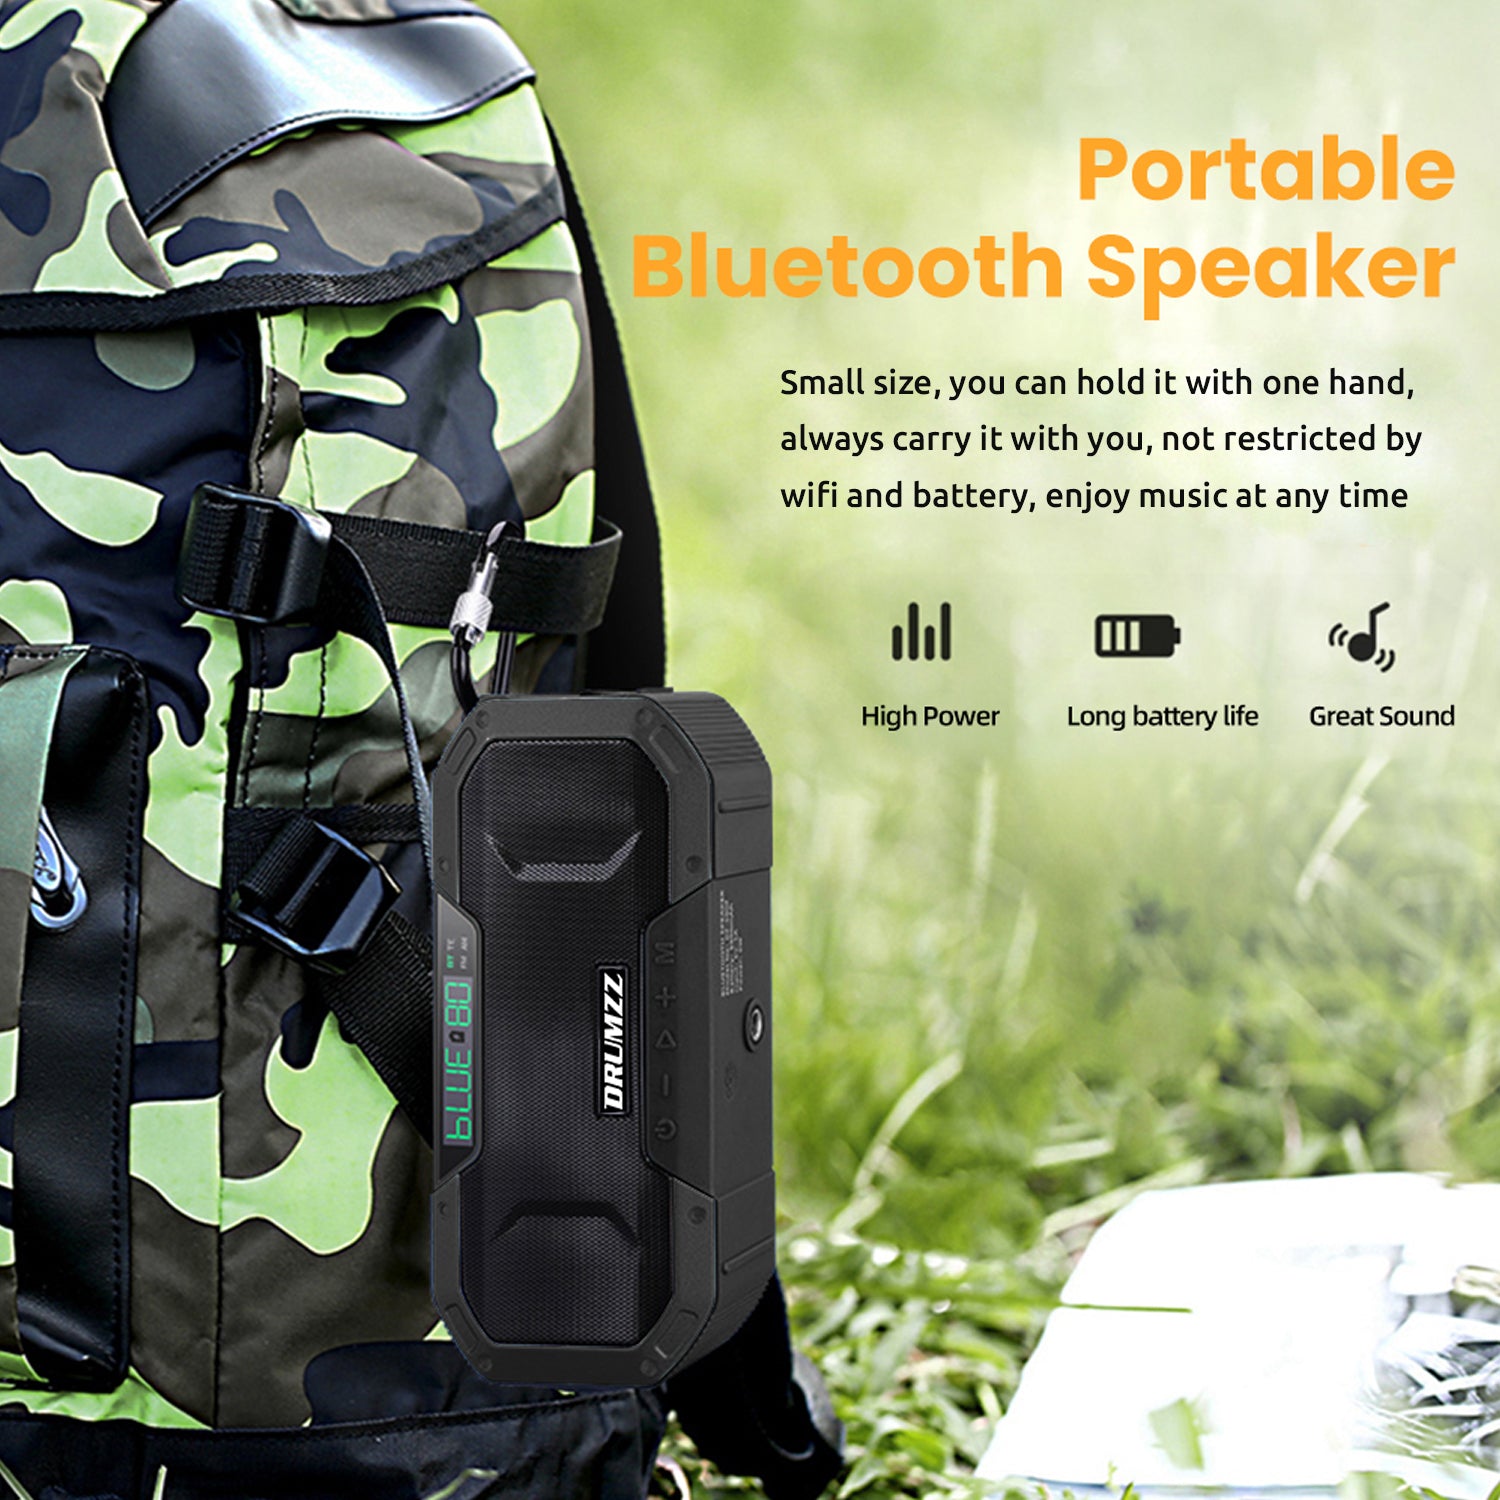 portable bluetooth speaker for hilking, trail walks, treking, 